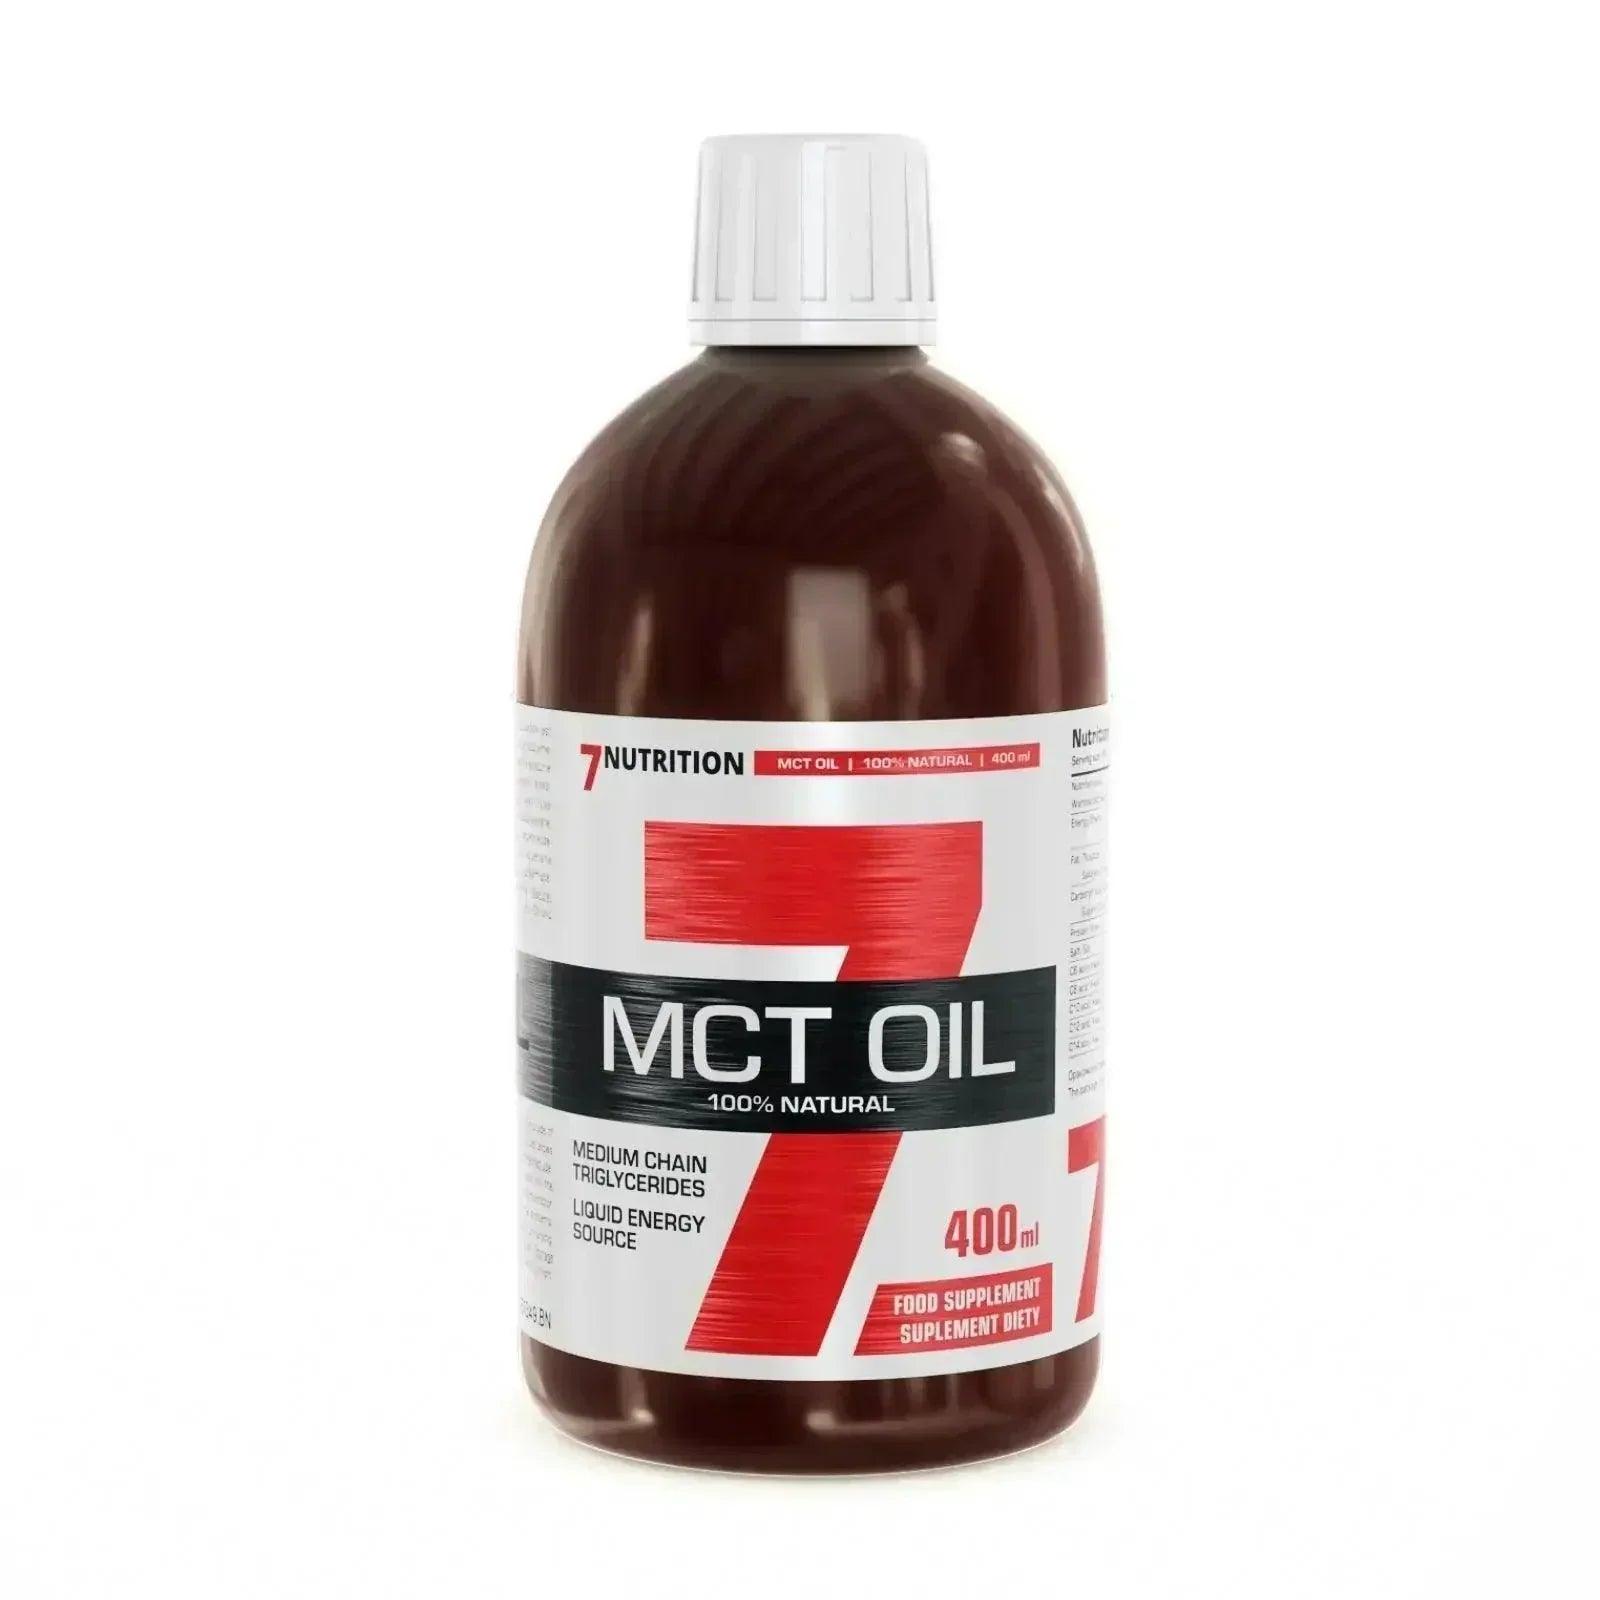 7Nutrition MCT ÖL 400ml - Supplement Support